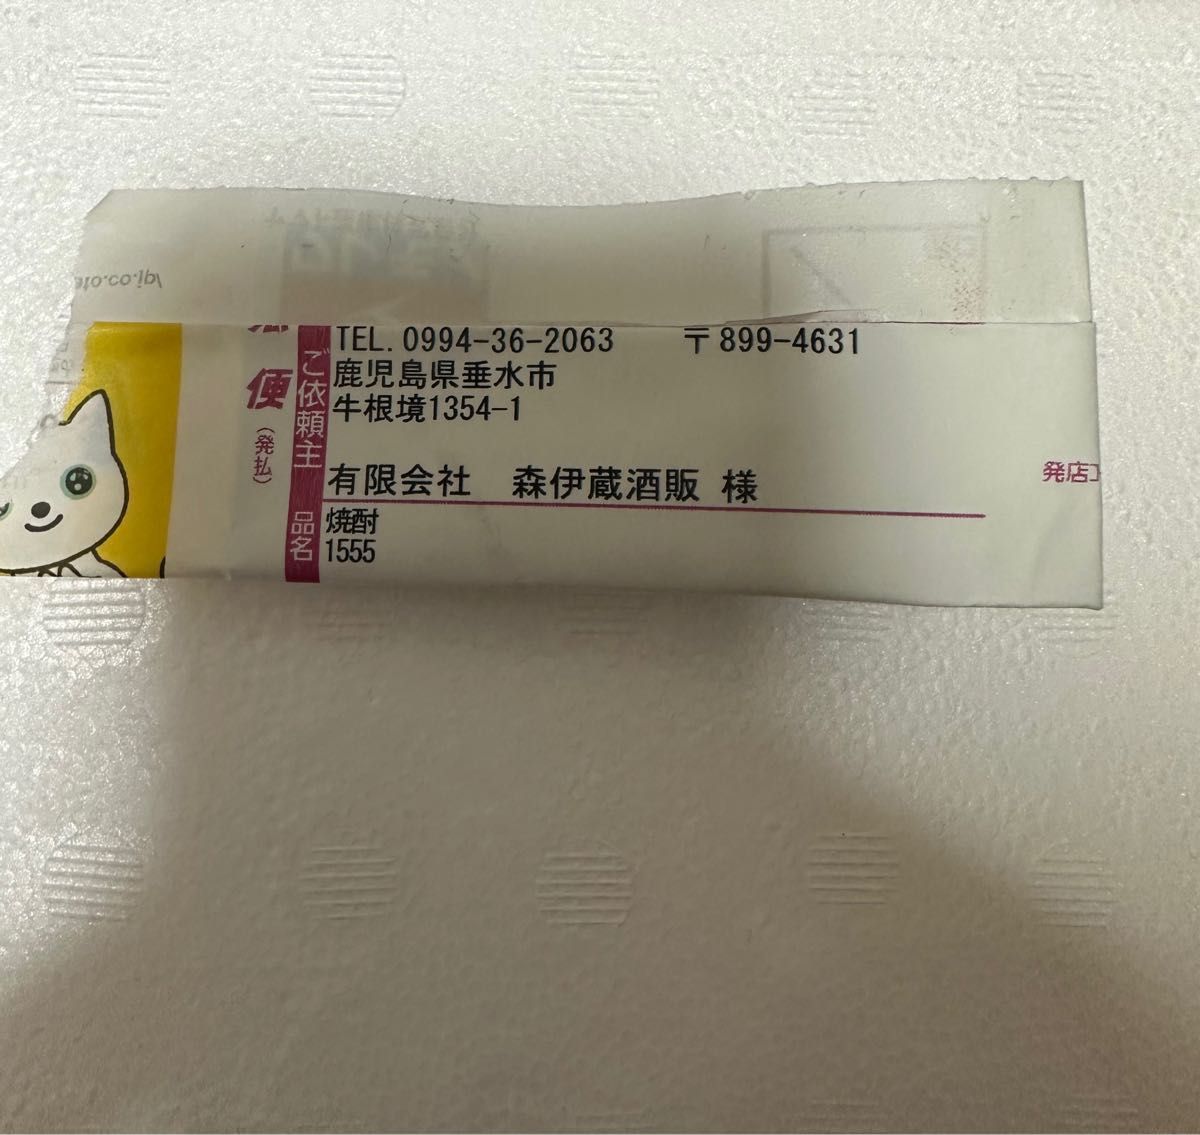 森伊蔵 芋焼酎 1800ml 7月到着品 発泡スチロール専用梱包 送料無料